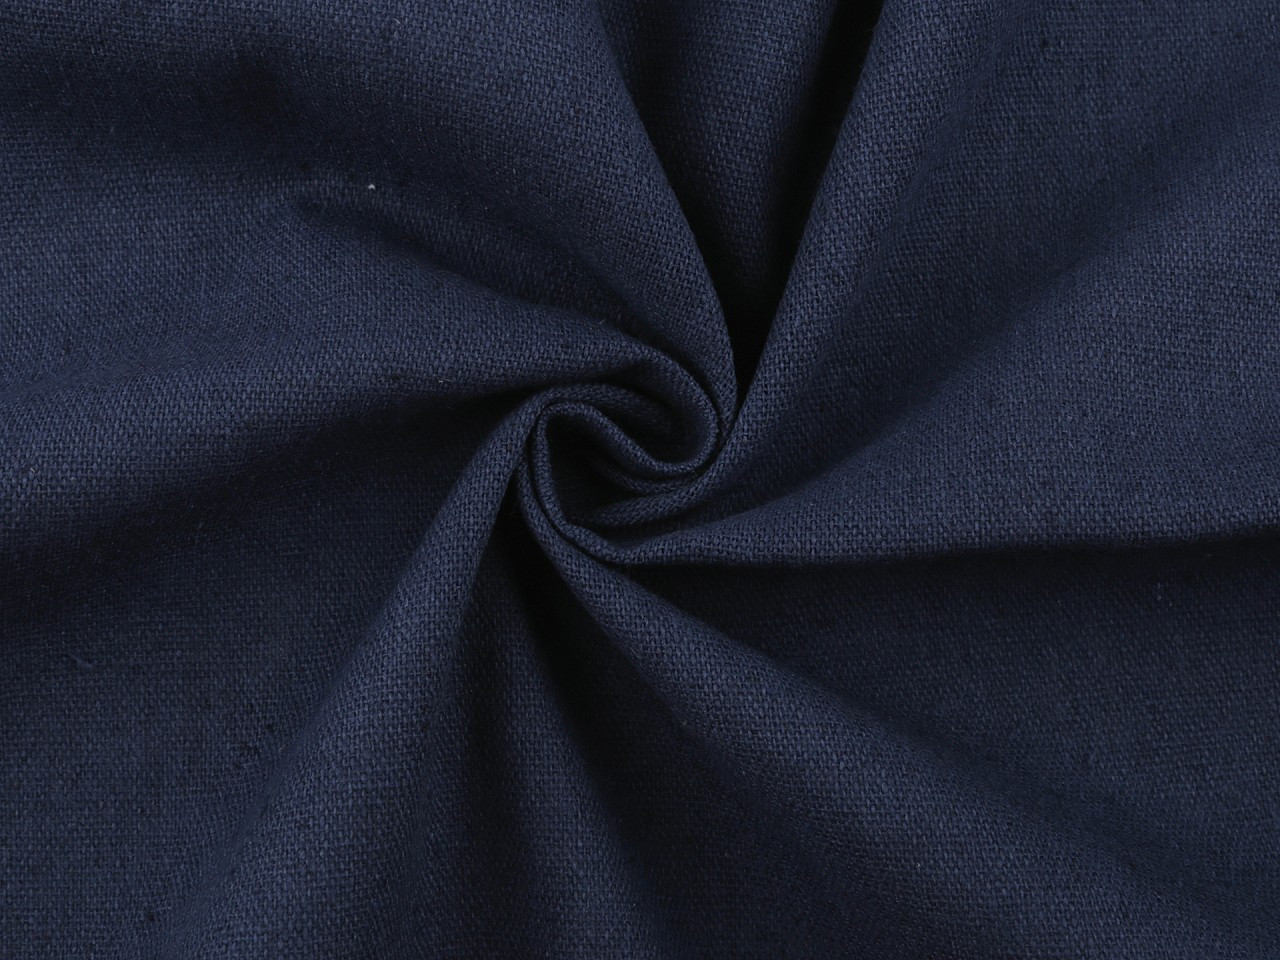 Lněná látka, barva 45 (170 g/m²) (19) modrá tmavá